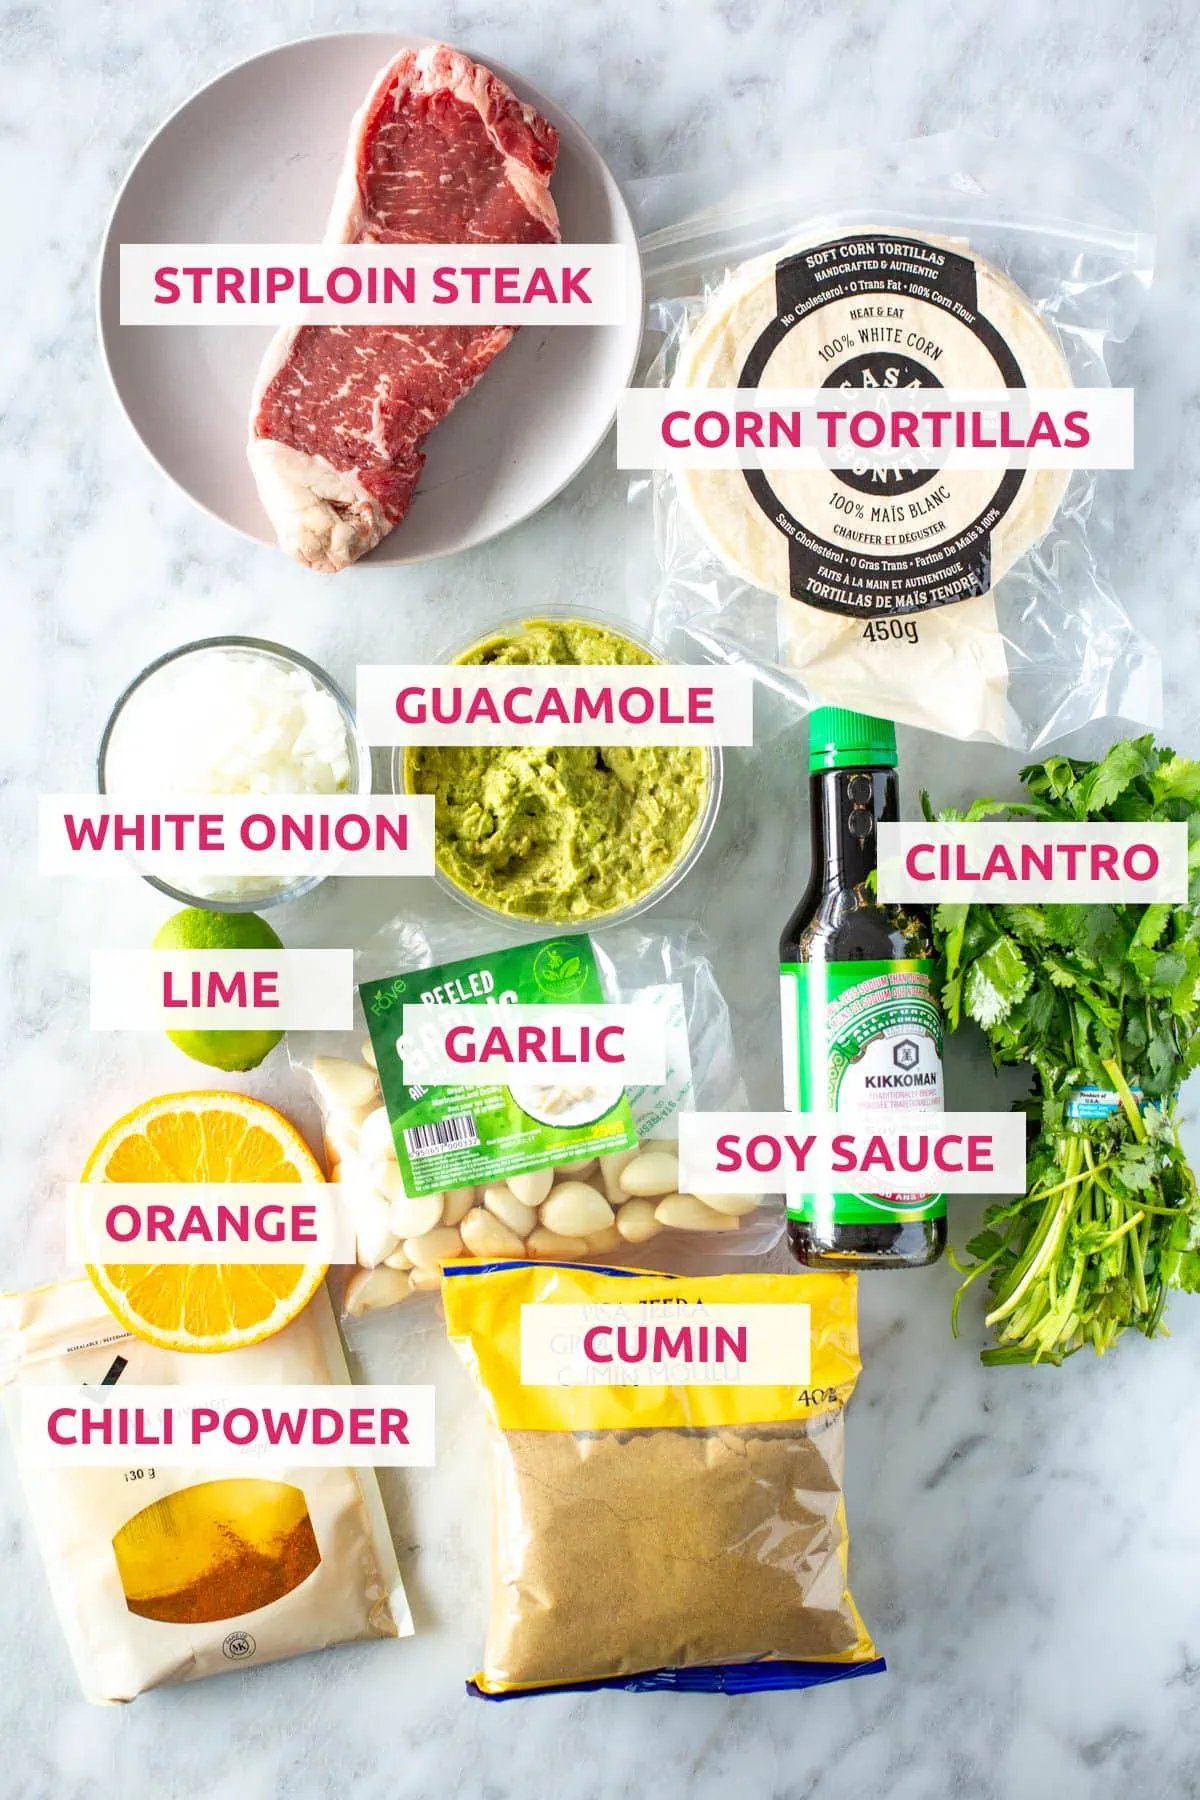 Ingredients for carne asada tacos: striploin steak, corn tortillas, white onion, guacamole, lime, garlic, soy sauce, cilantro, orange, chili powder and cumin